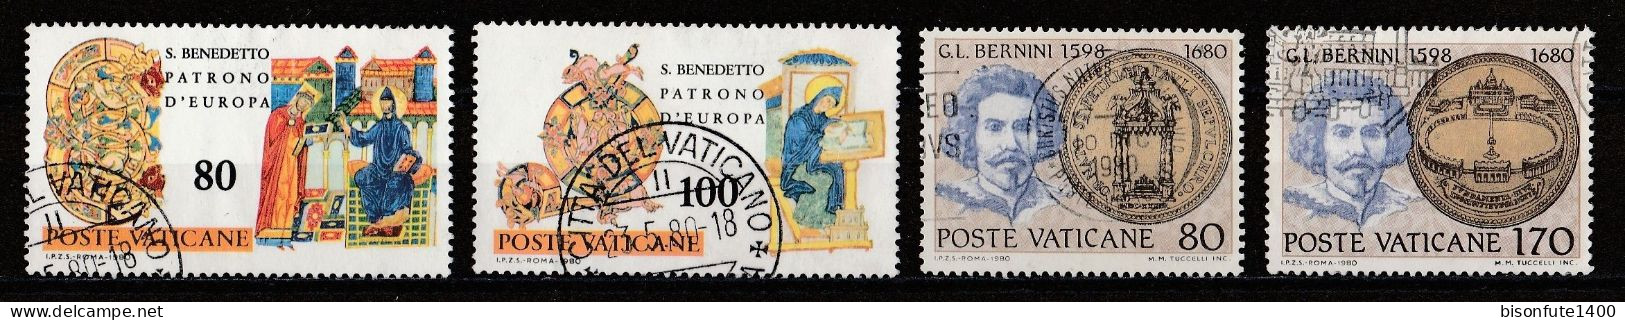 Vatican 1980 : Timbres Yvert & Tellier N° 689 - 690 - 694 - 695 - 696 - 698 - 699 - 700 Et 701 Oblitérés. - Gebraucht